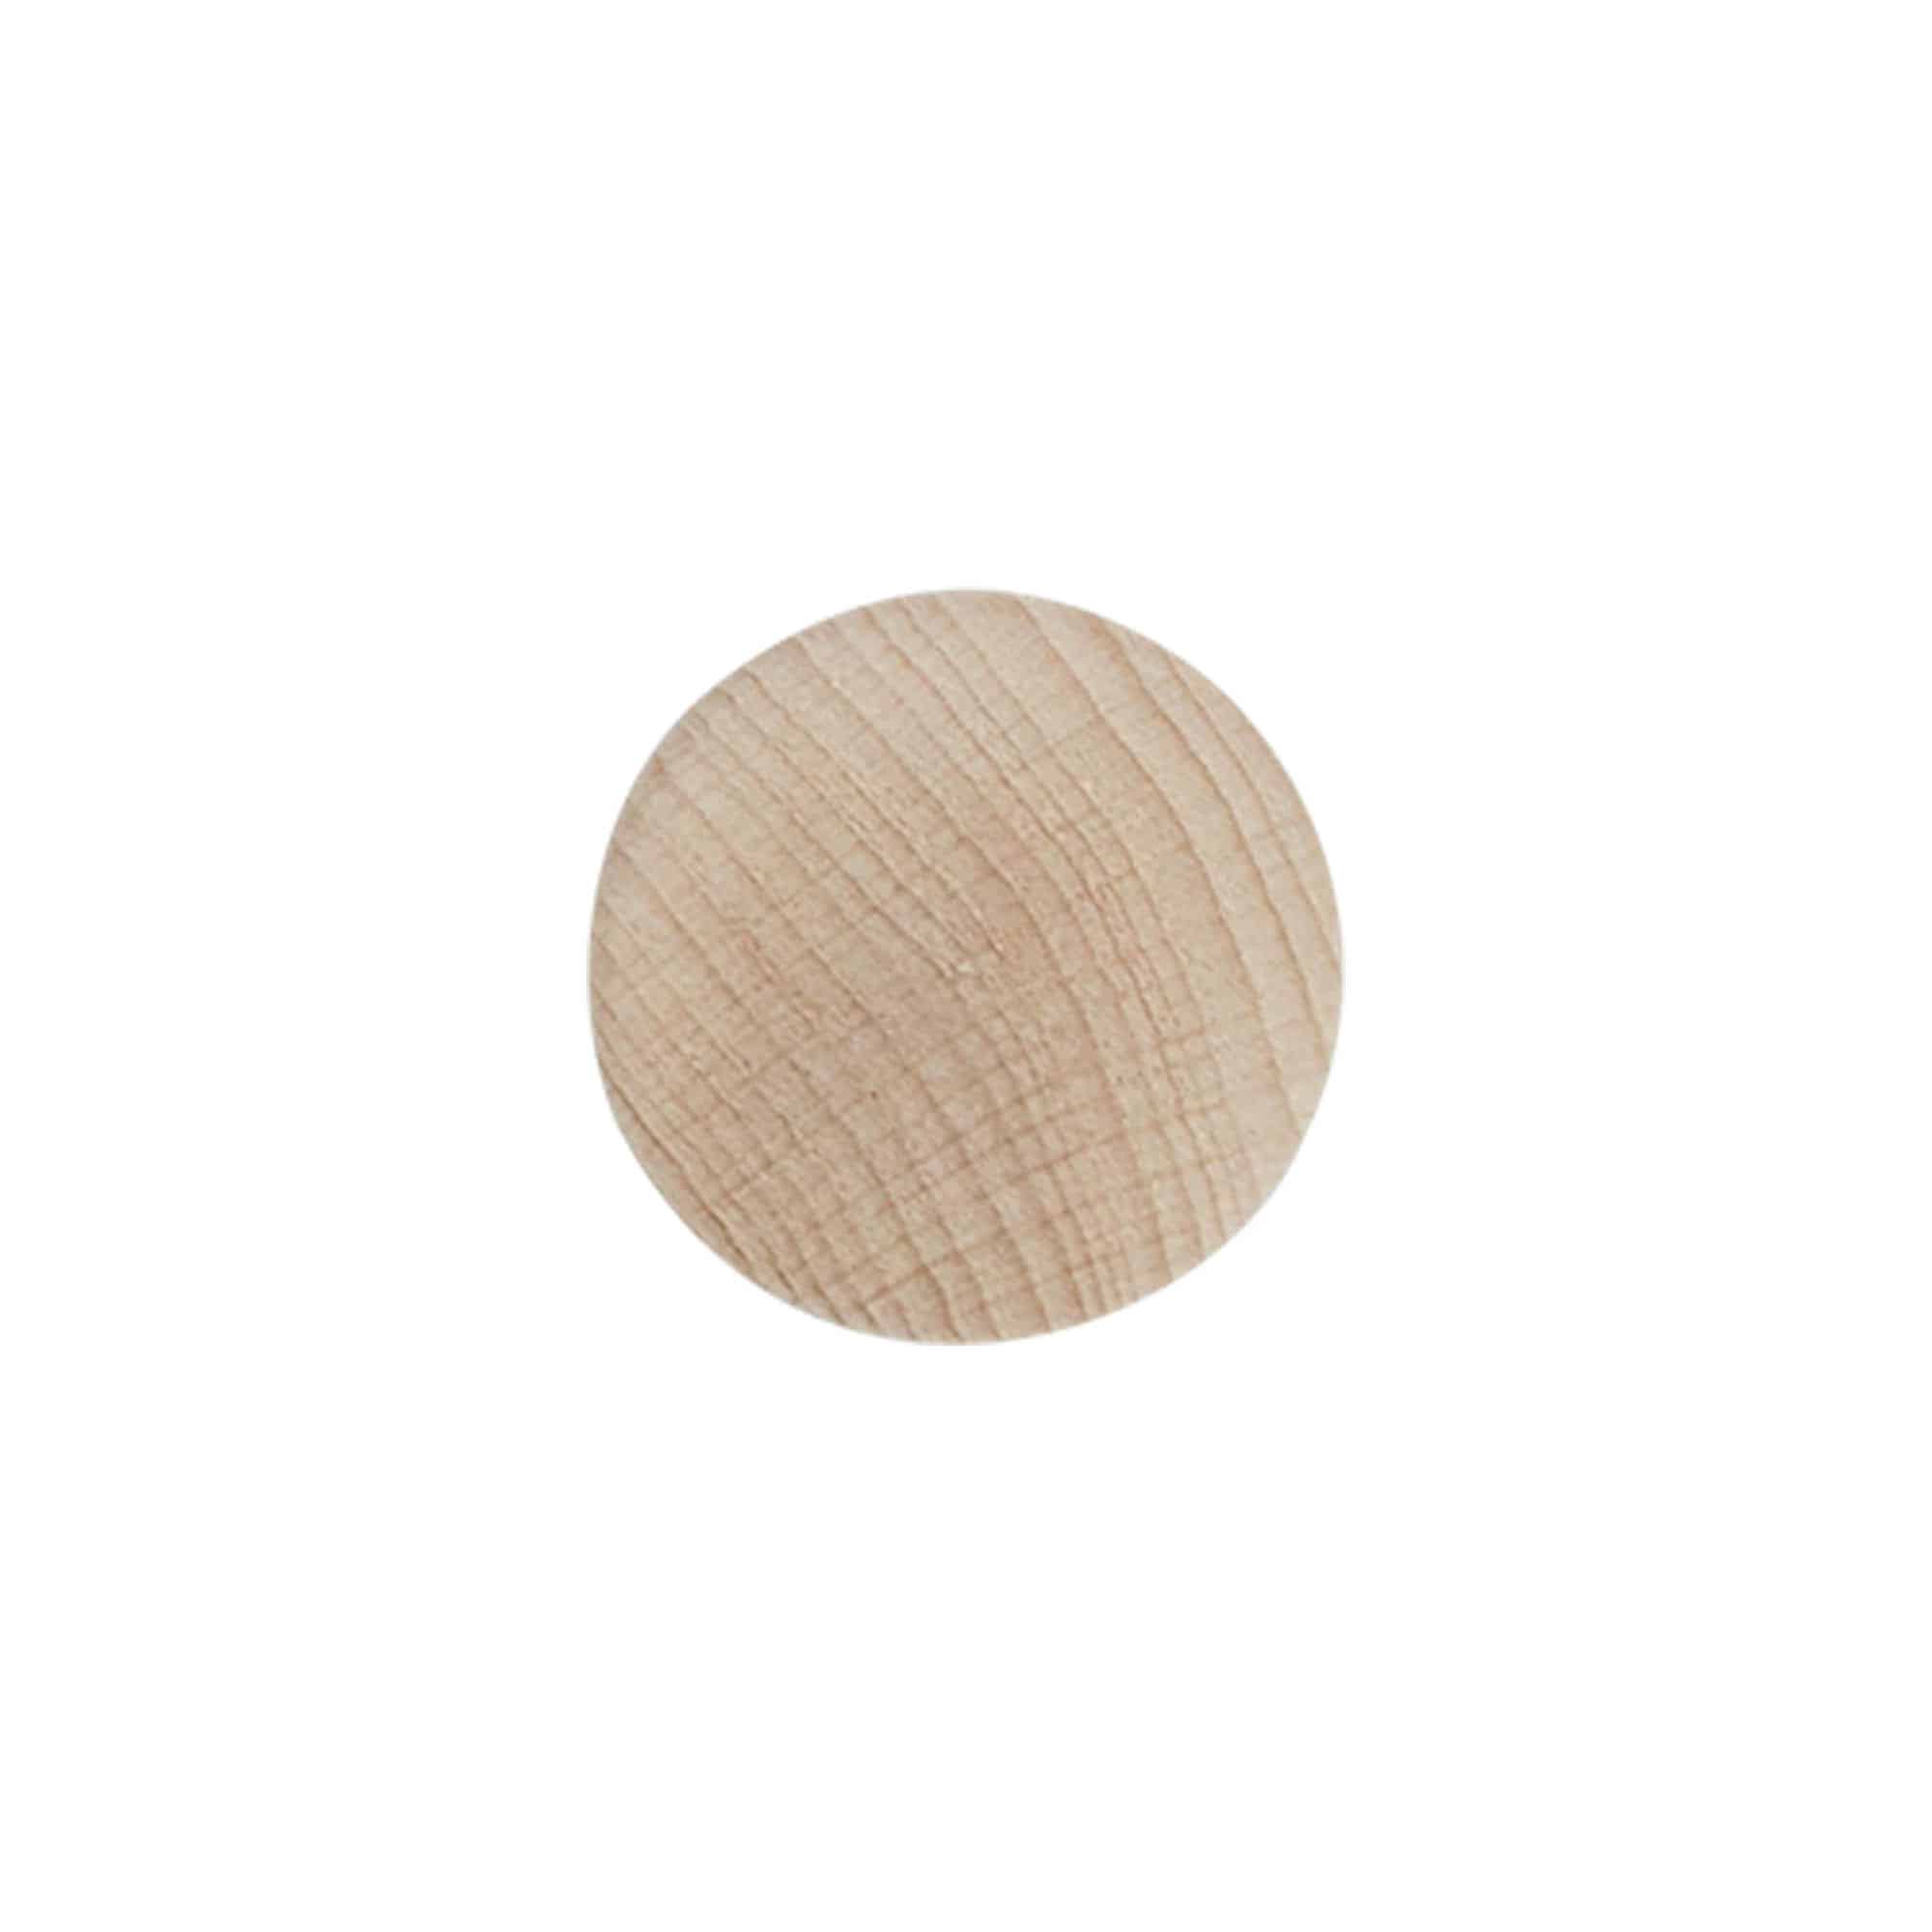 21.5 mm mushroom cork, wood, for opening: cork